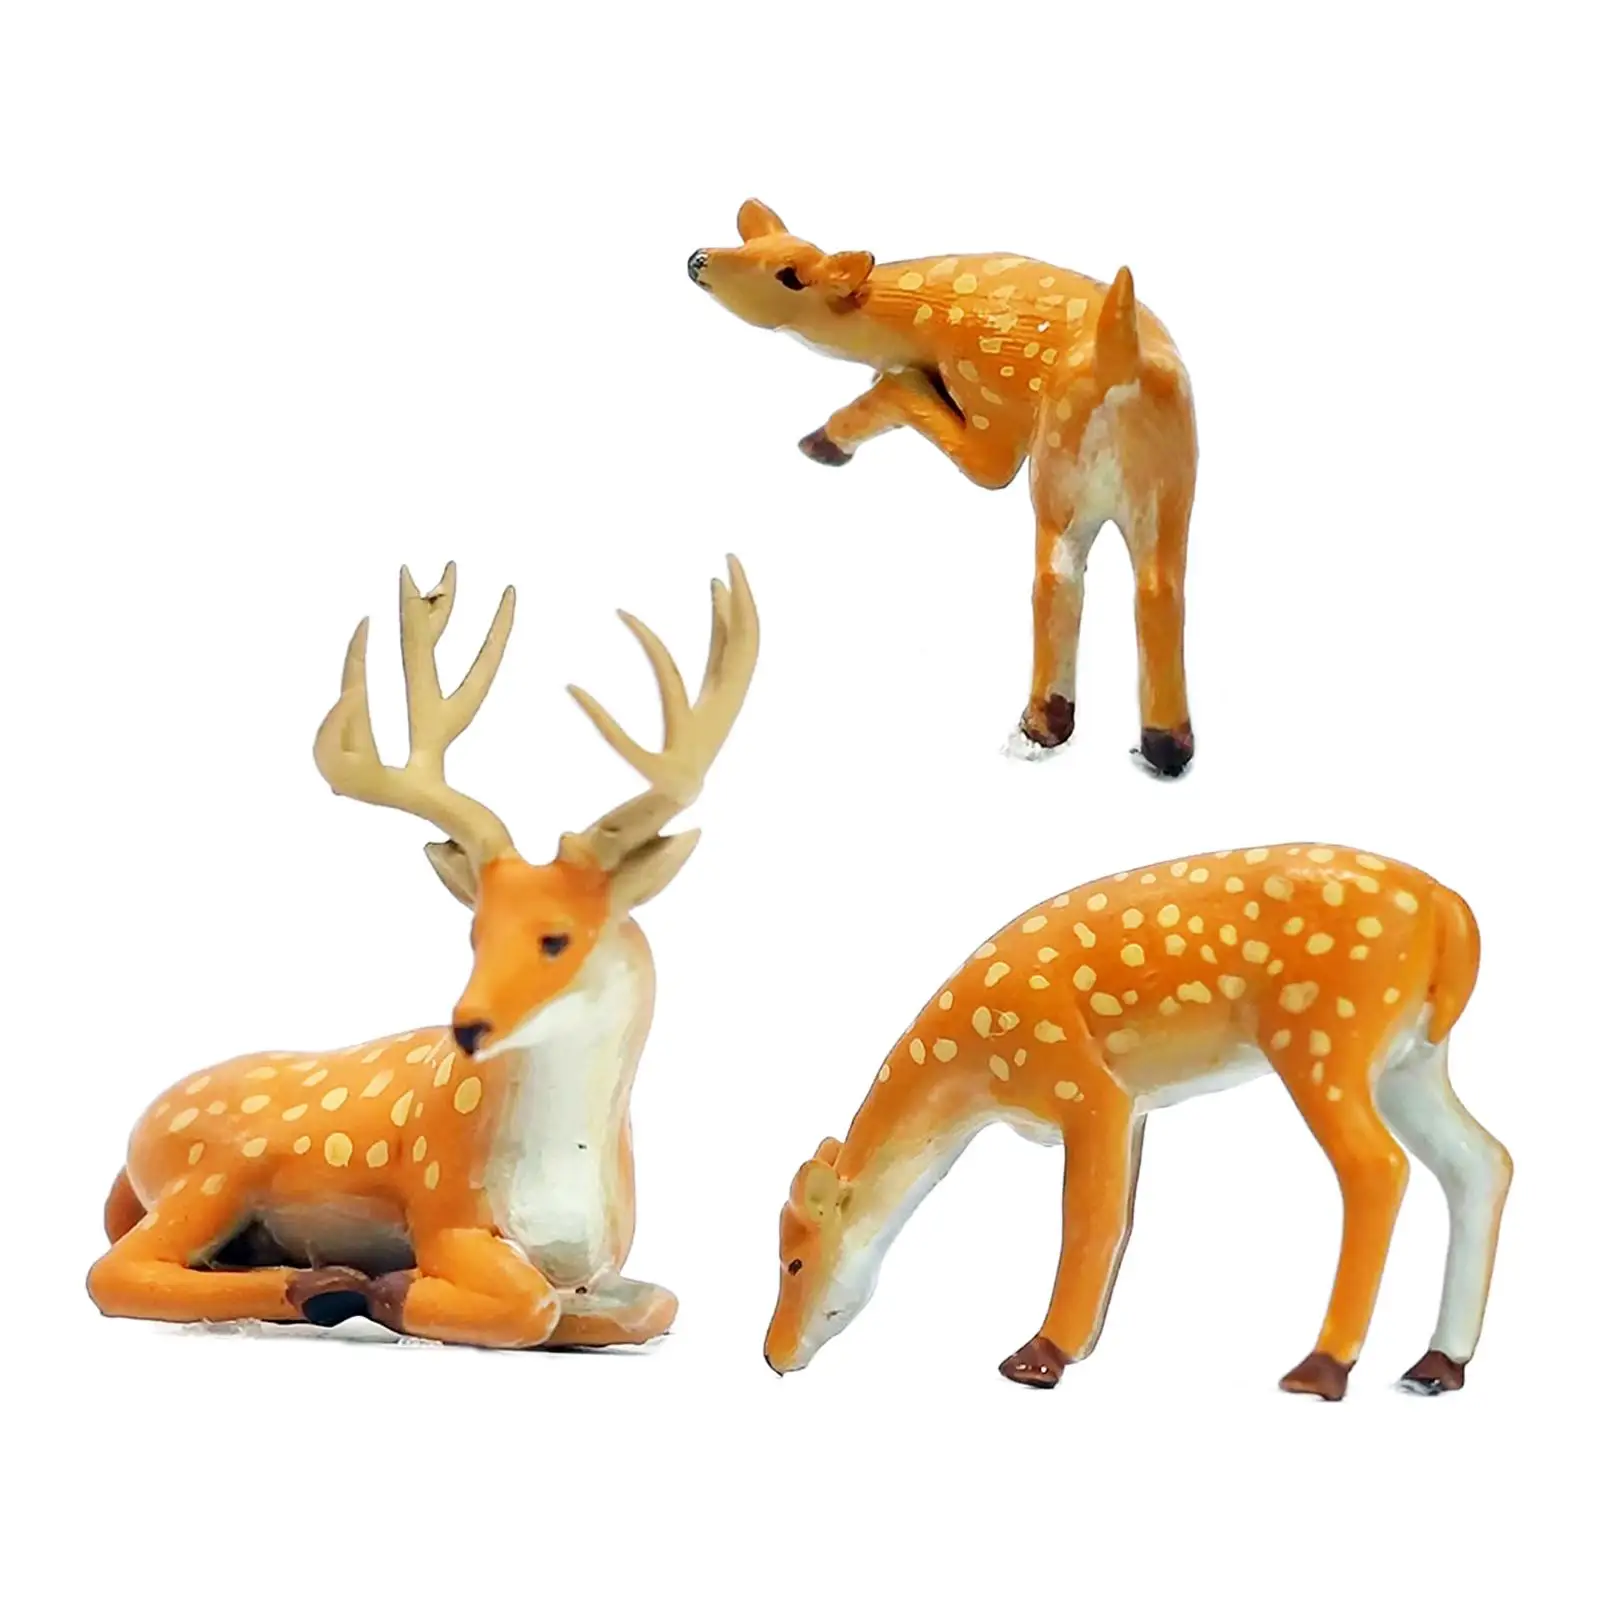 3 Pieces 1/64 Scale Deer Figures Resin Statue for Crafts Desktop Decoration